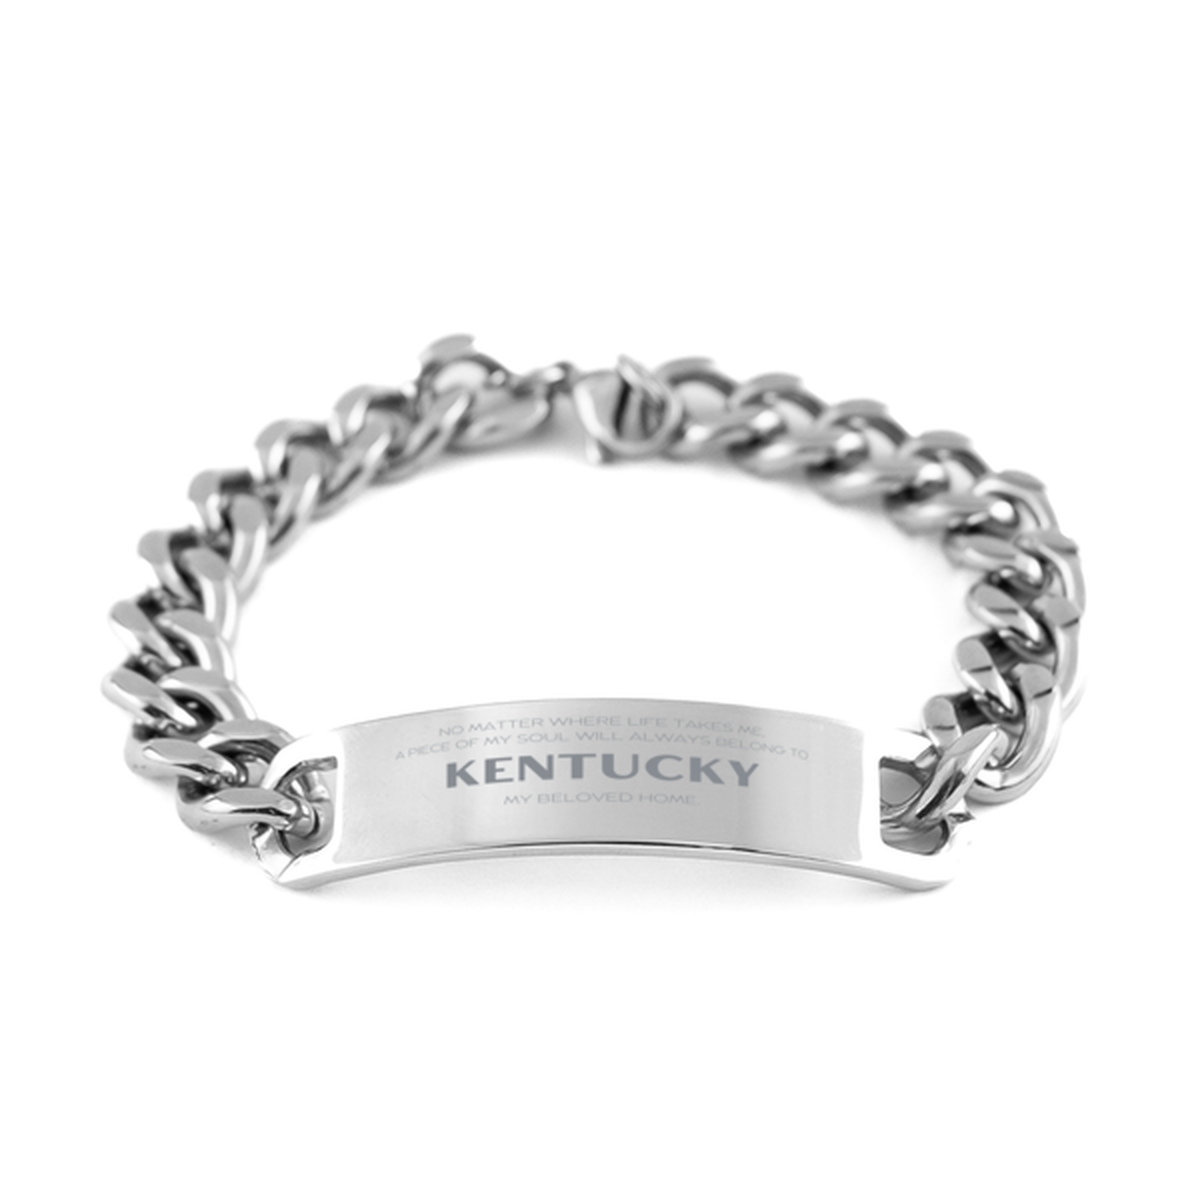 Love Kentucky State Gifts, My soul will always belong to Kentucky, Proud Cuban Chain Stainless Steel Bracelet, Birthday Unique Gifts For Kentucky Men, Women, Friends